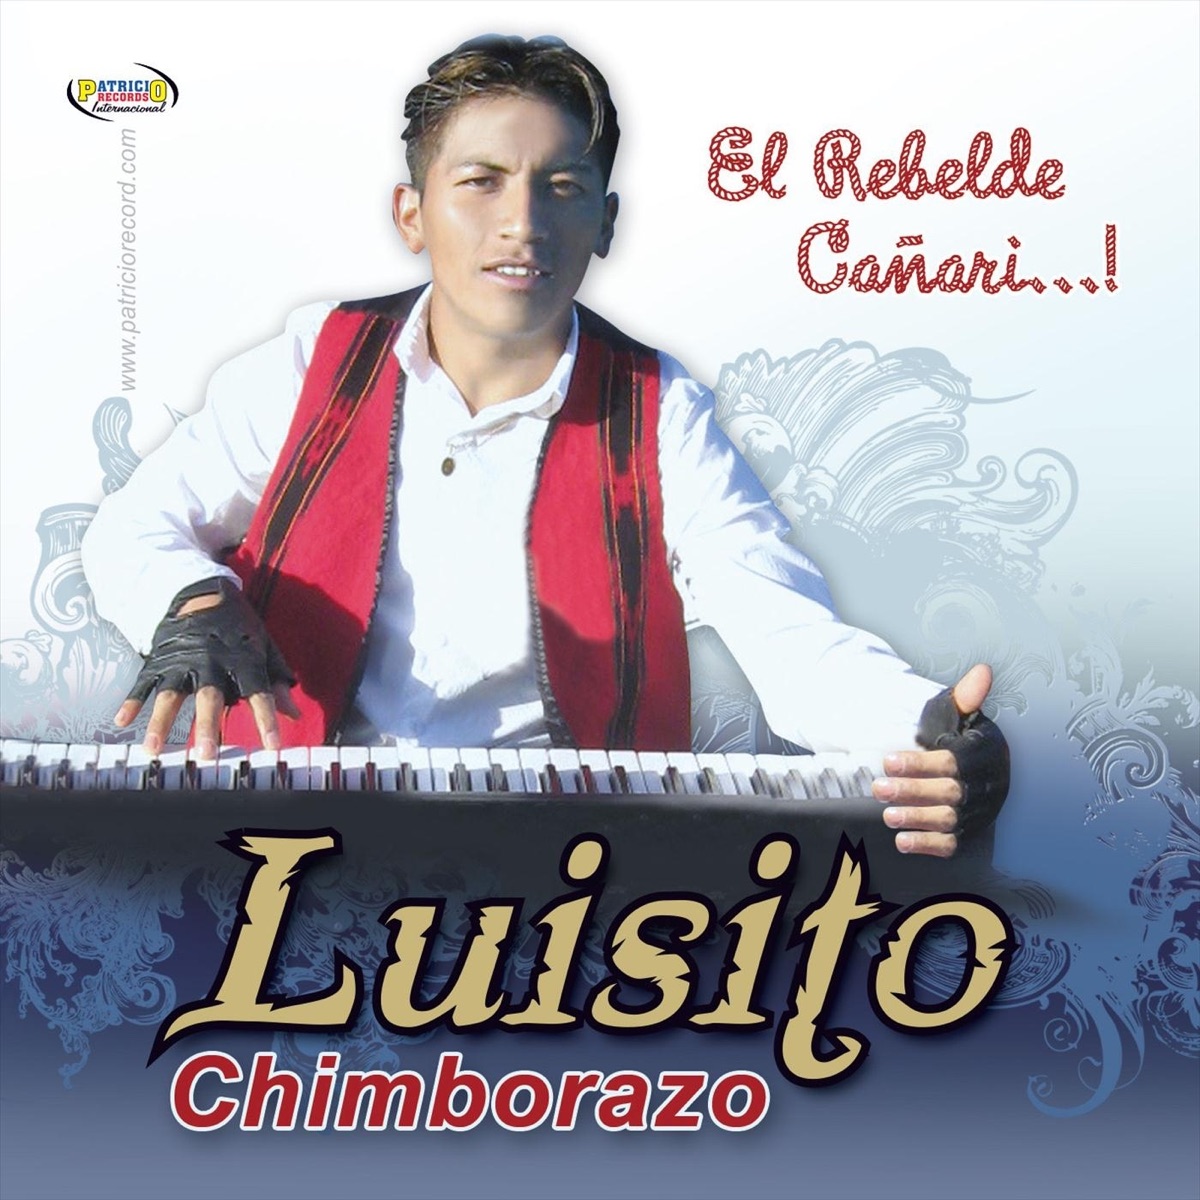 Stream tema : Sumag Cuisa,,,,,,,,, luisito el rebelde cañary by CHIMBORAZO  RECORD'S